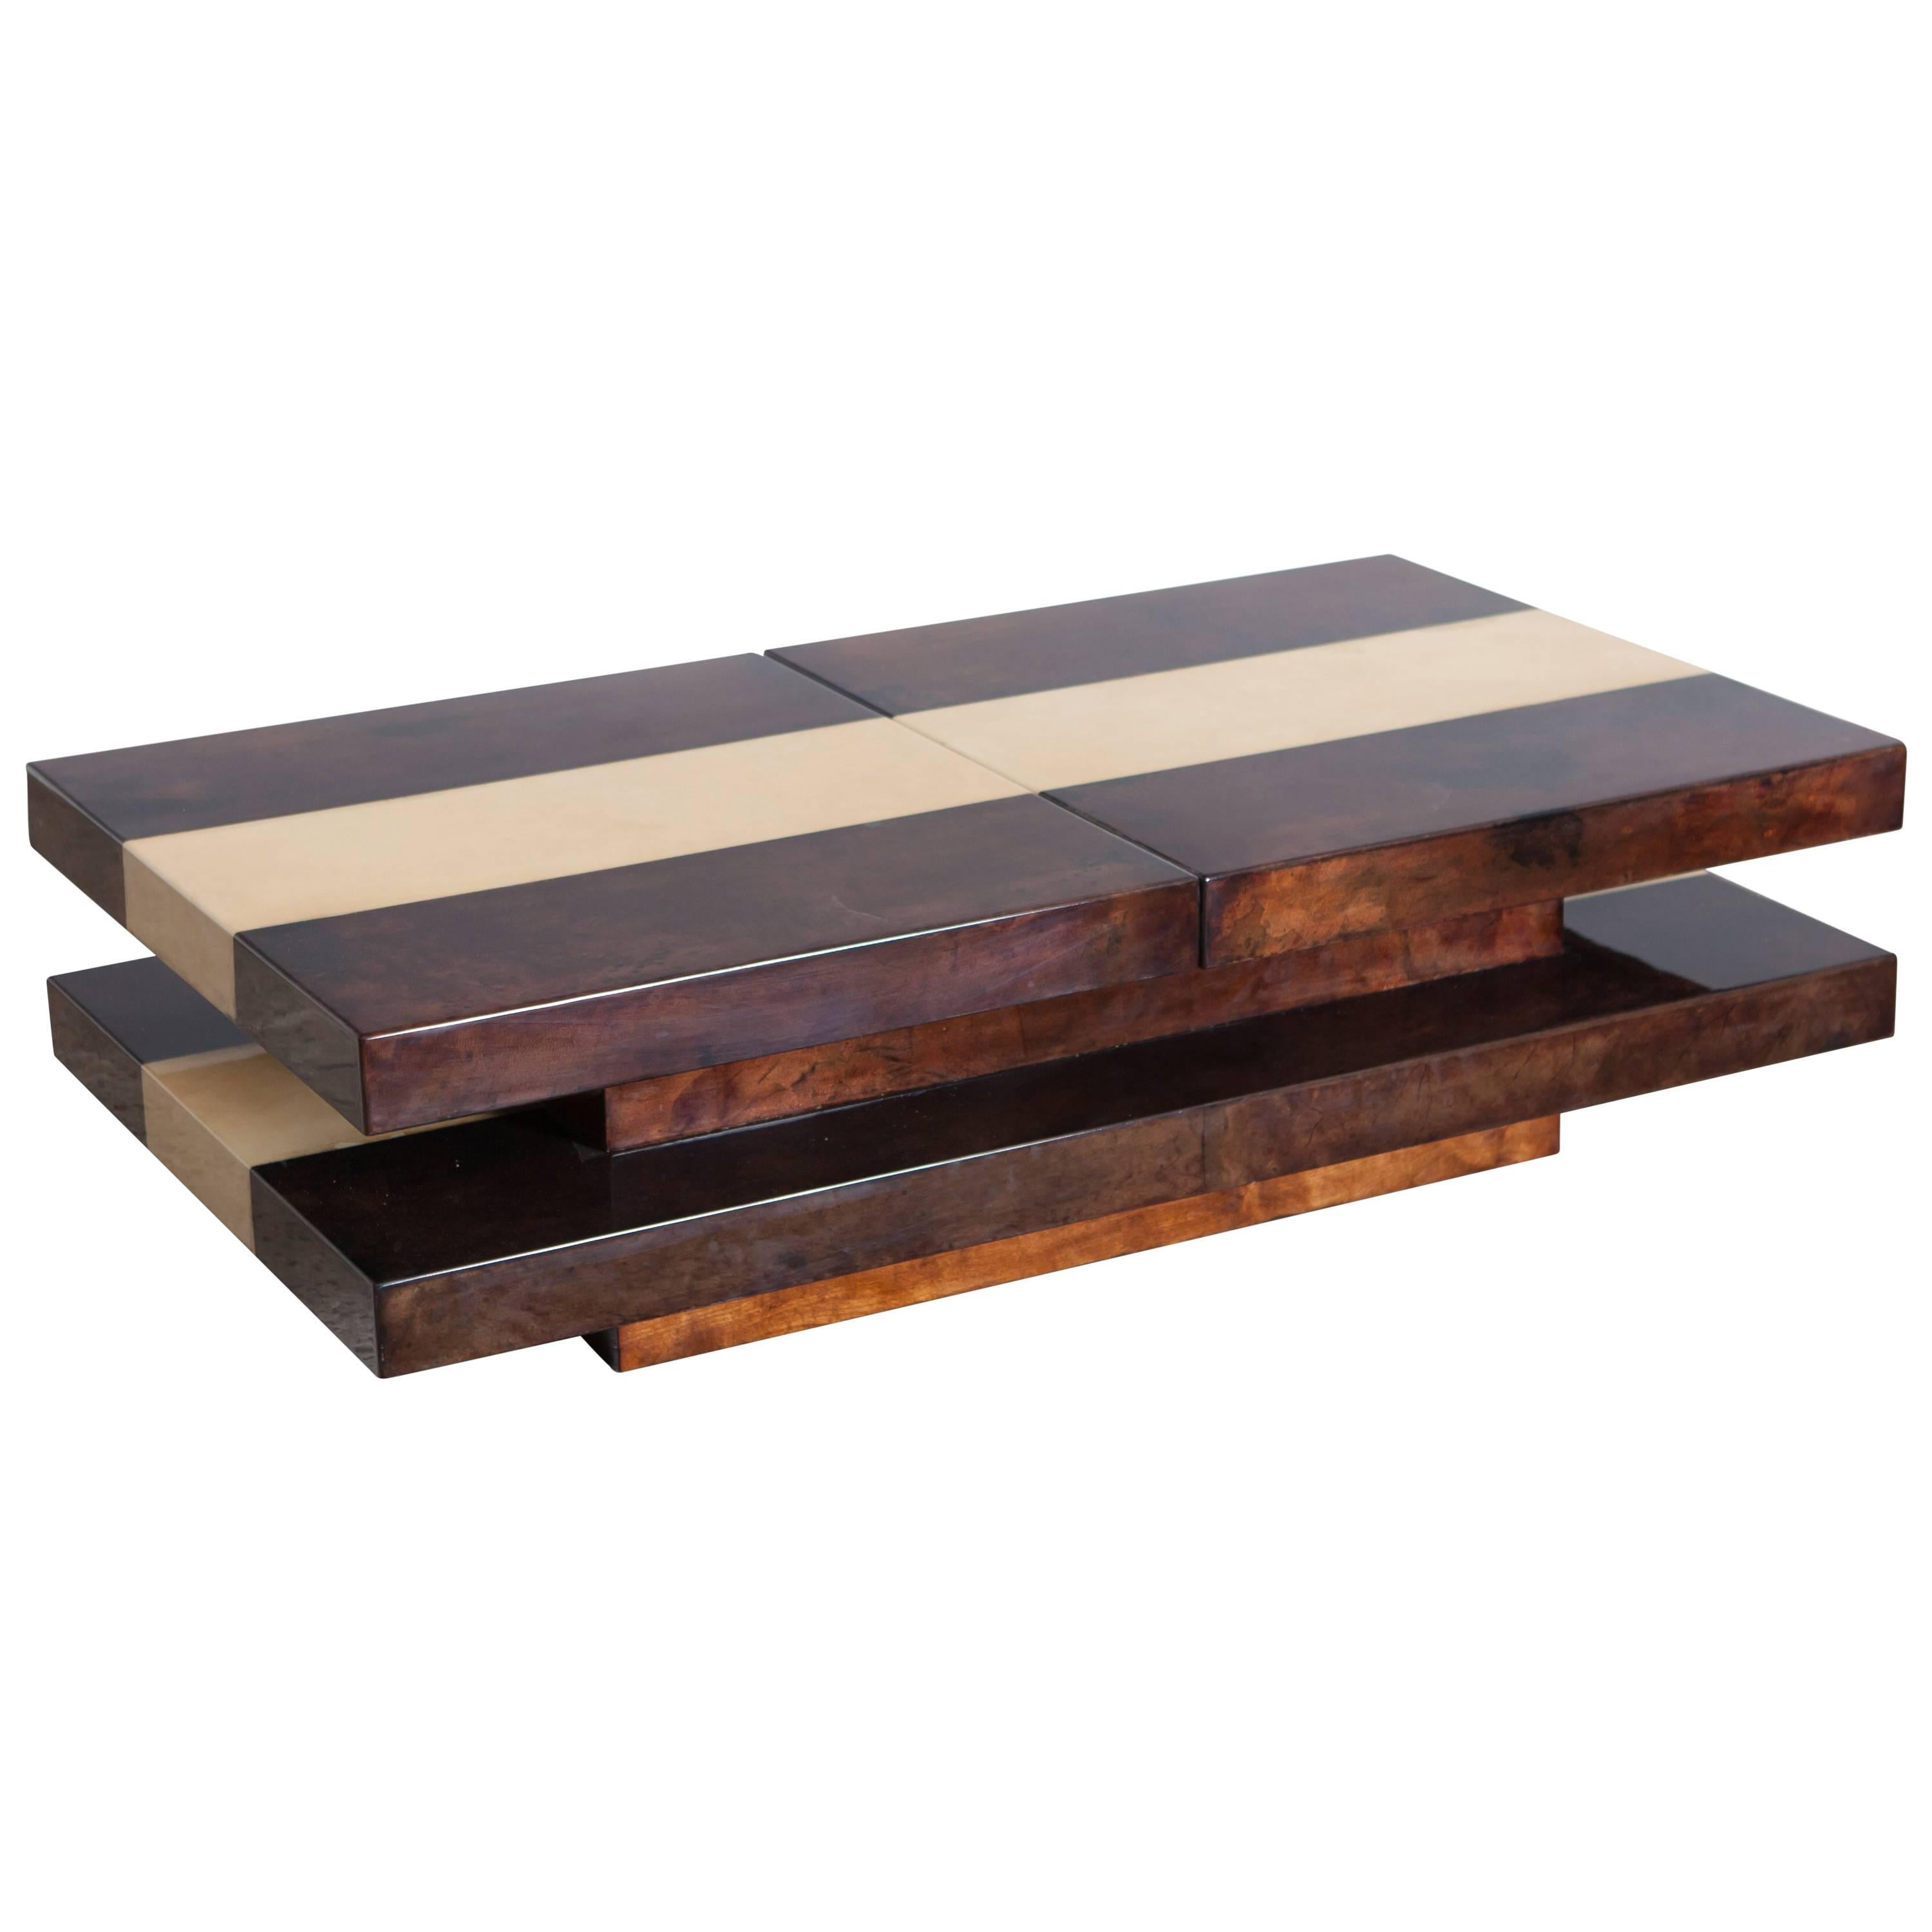 Aldo Tura two tier sliding coffee table with hidden bar